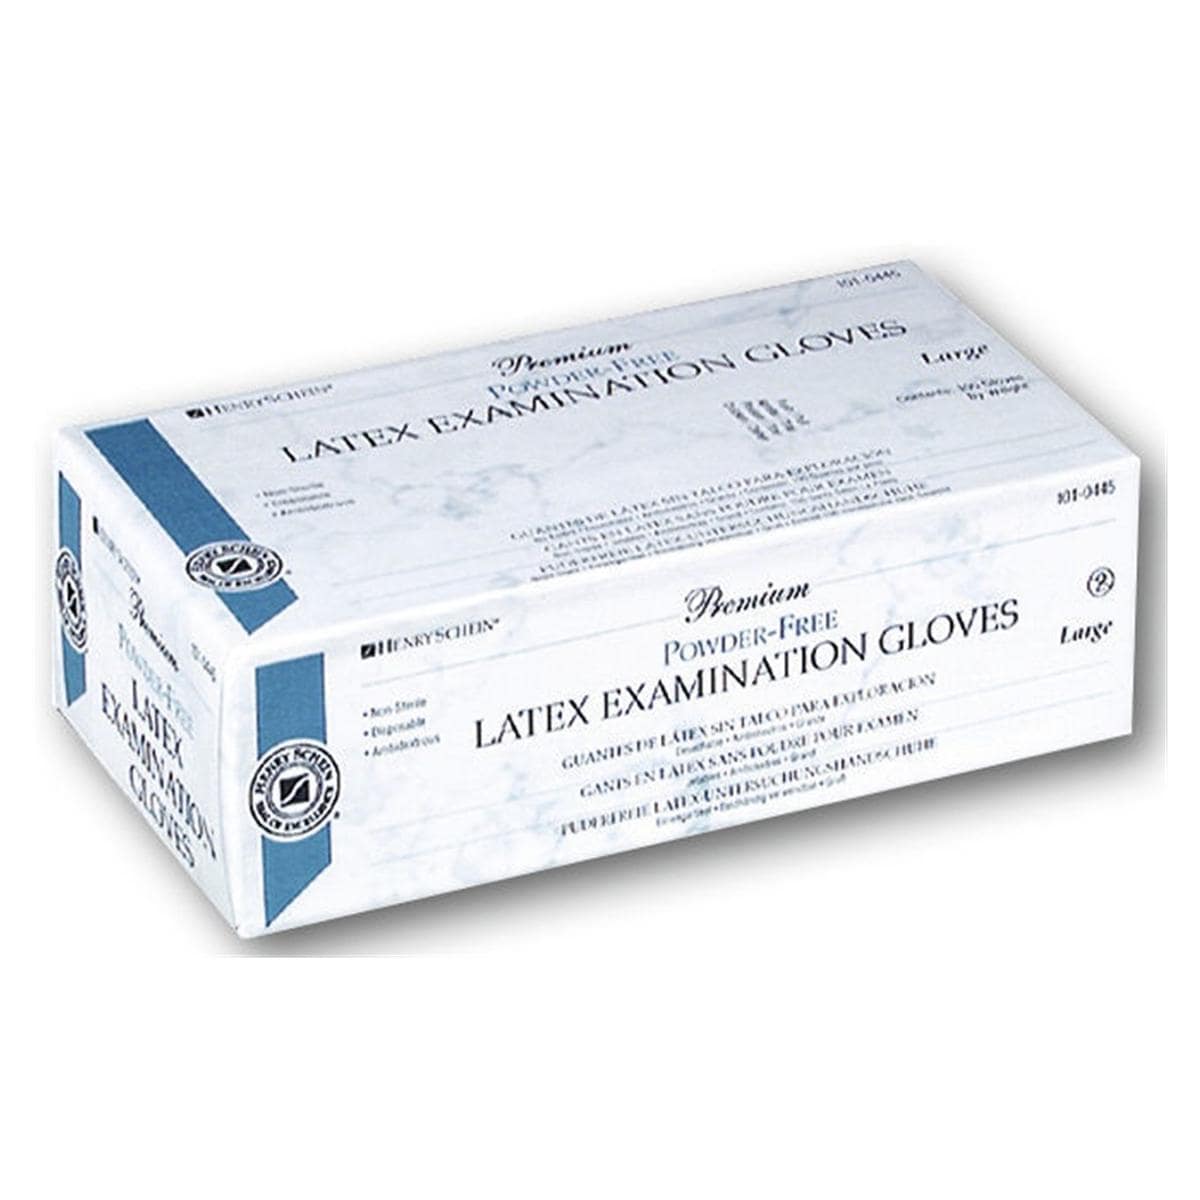 Premium Latex Powder Free Gloves - XL - 100 stuks